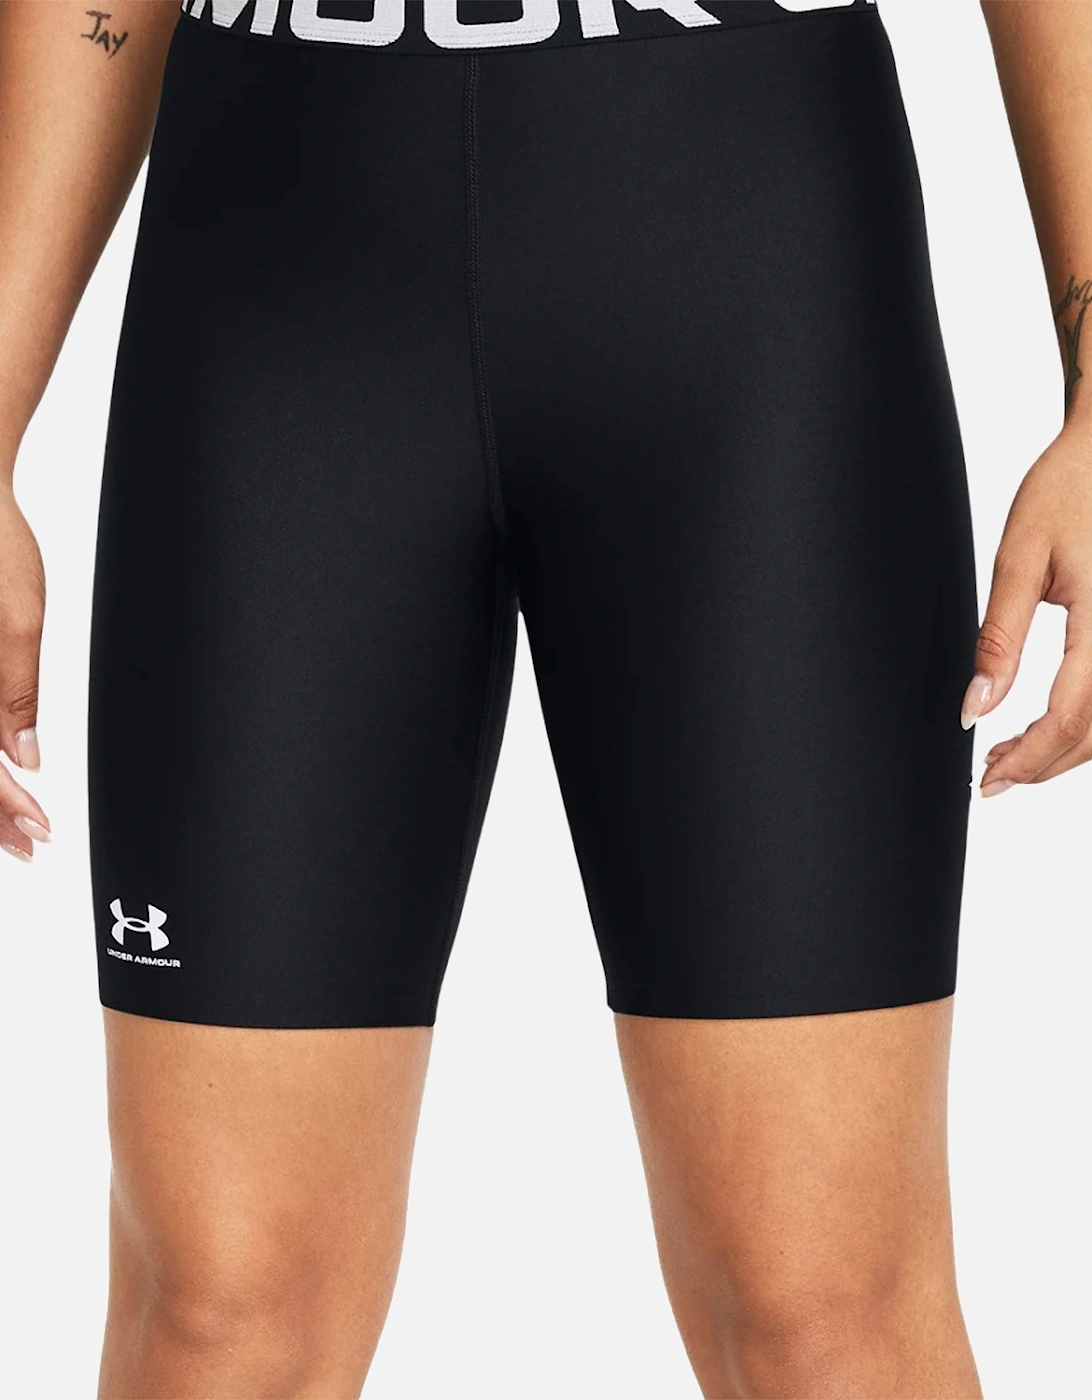 Womens Heat Gear 8" Shorts (Black)